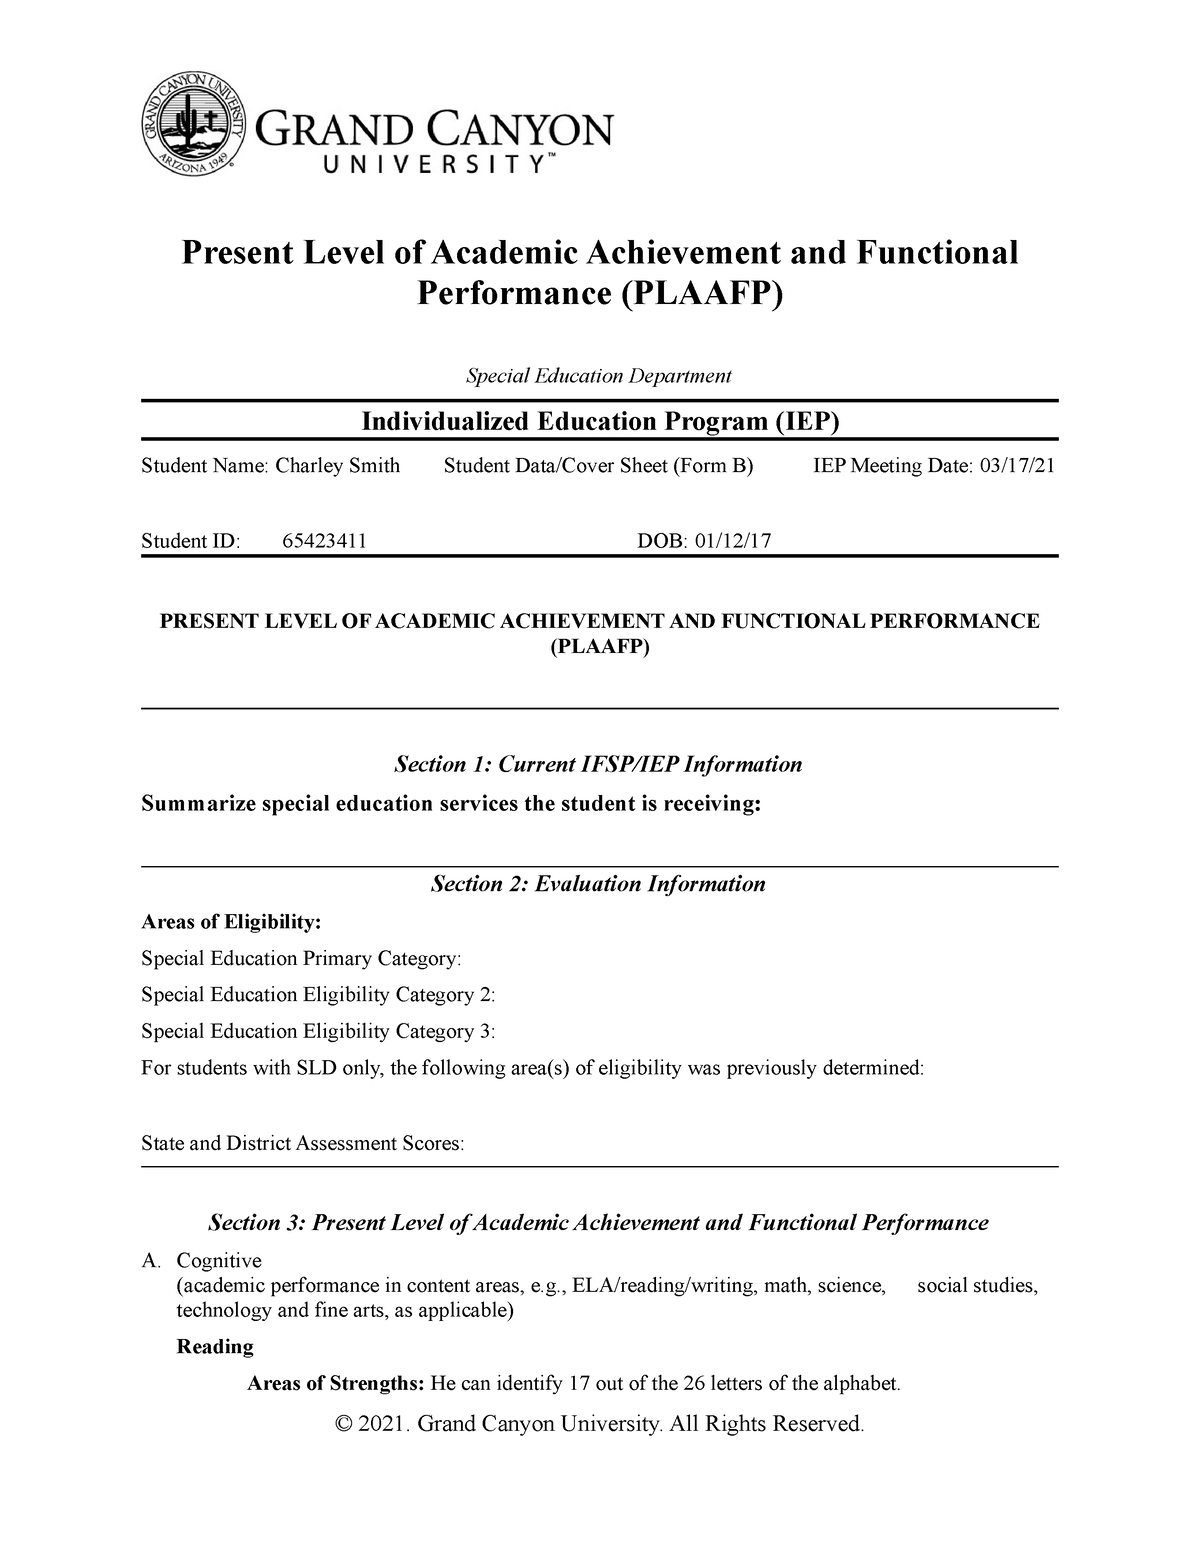 plaafp-part-2-of-original-present-level-of-academic-achievement-and